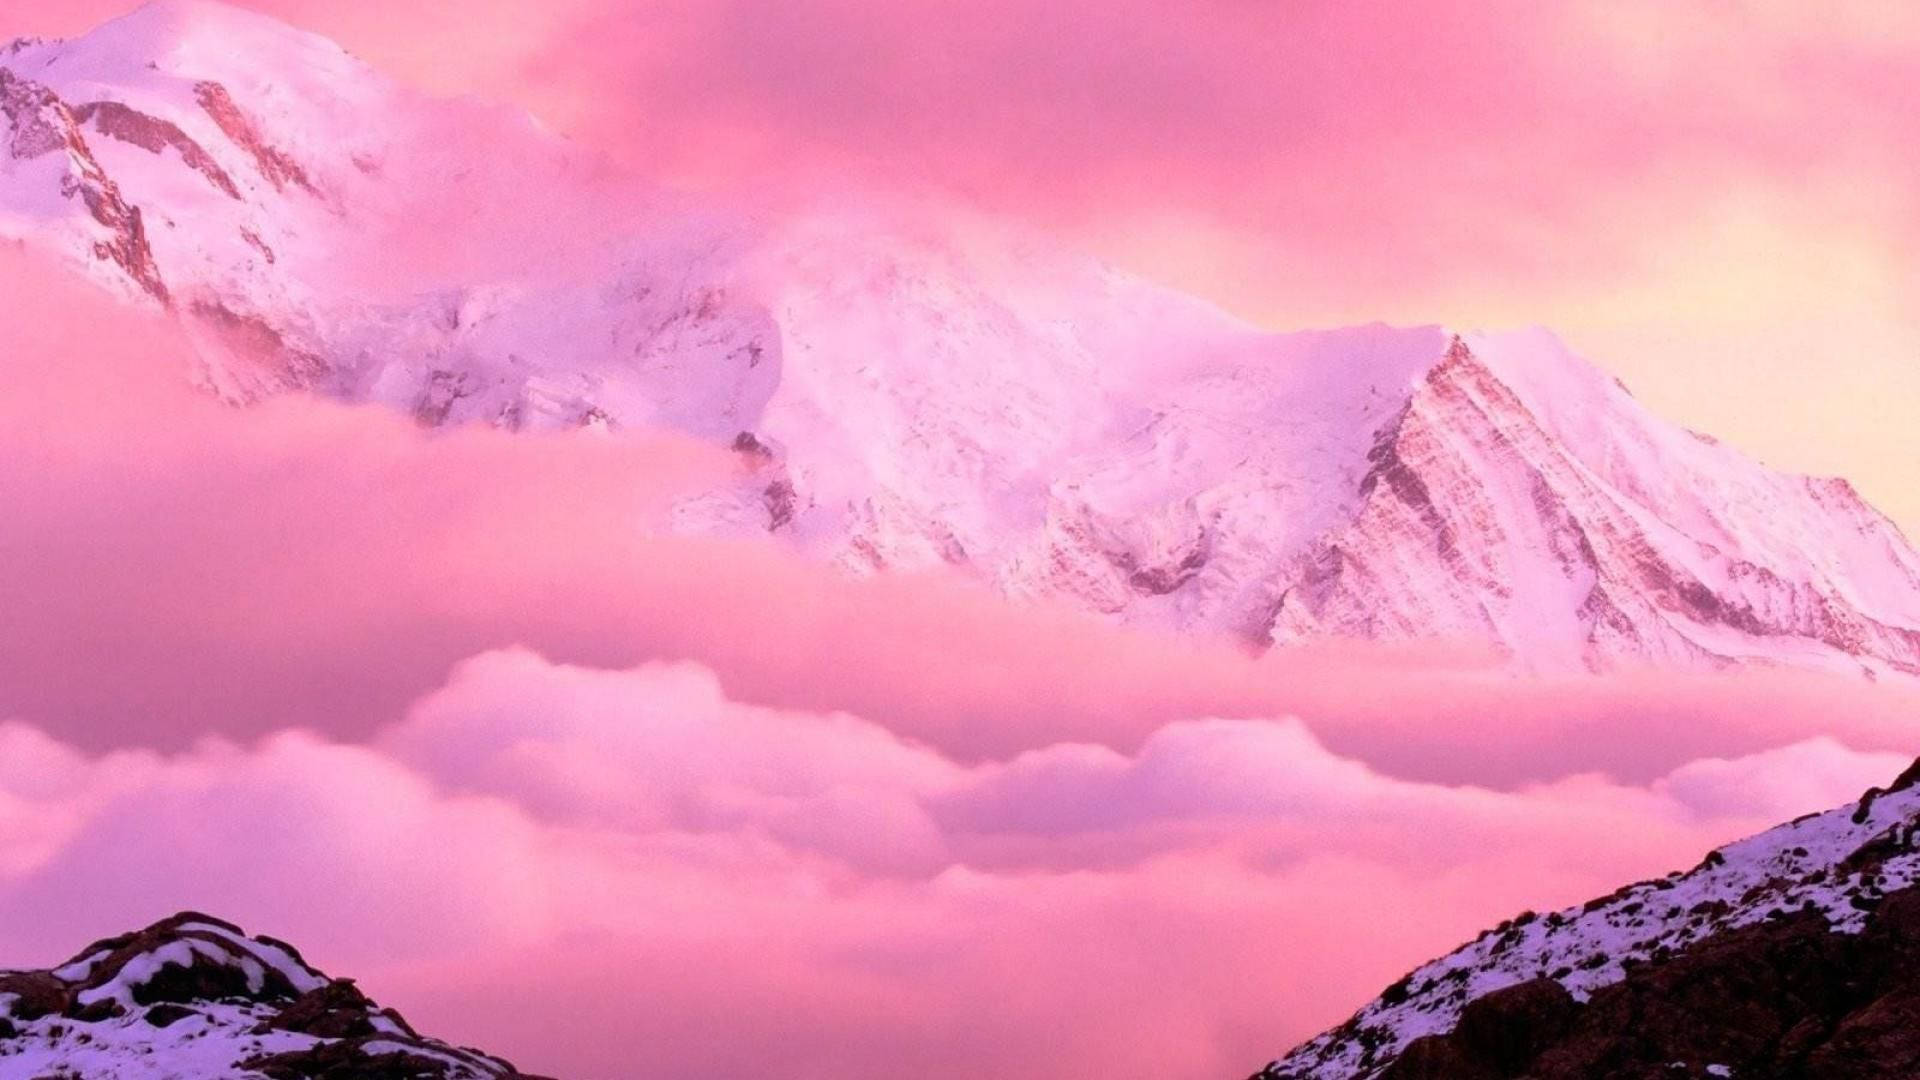 Aesthetic Pink Mountain